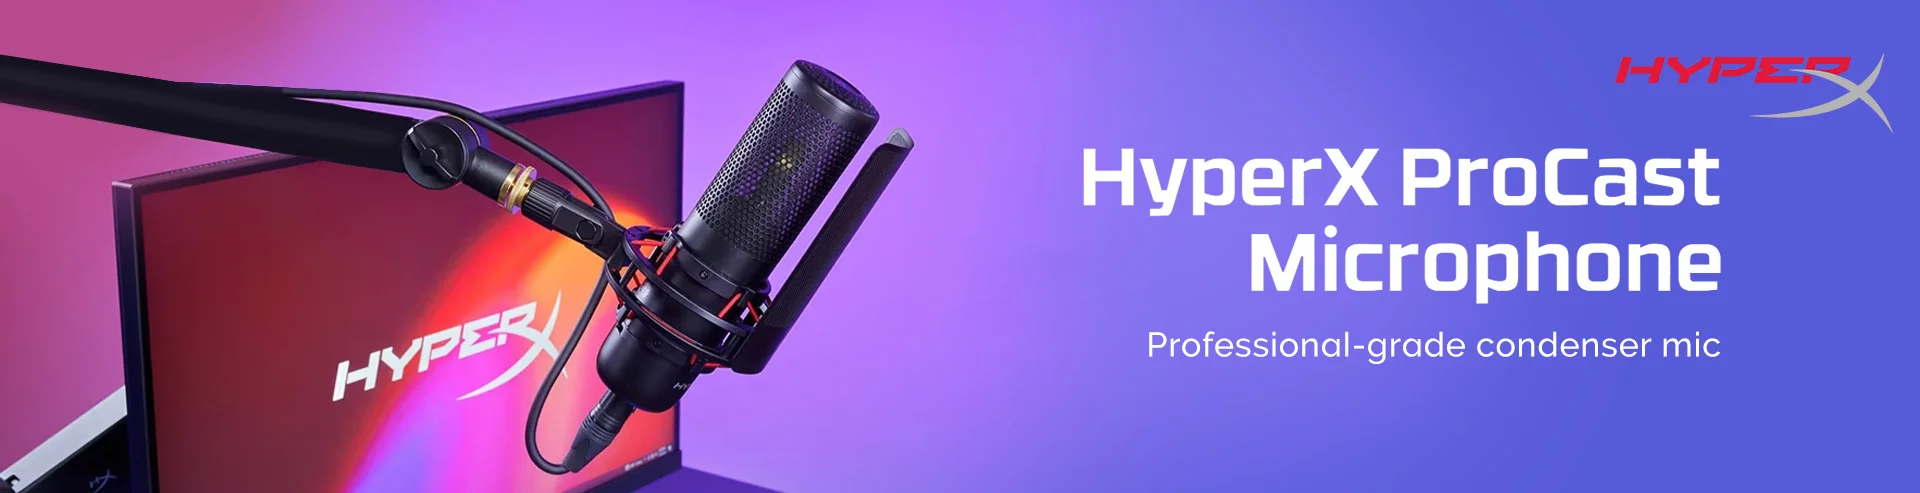 Full-Width-Large-HyperX-Procast-Microphone-Desktop.webp